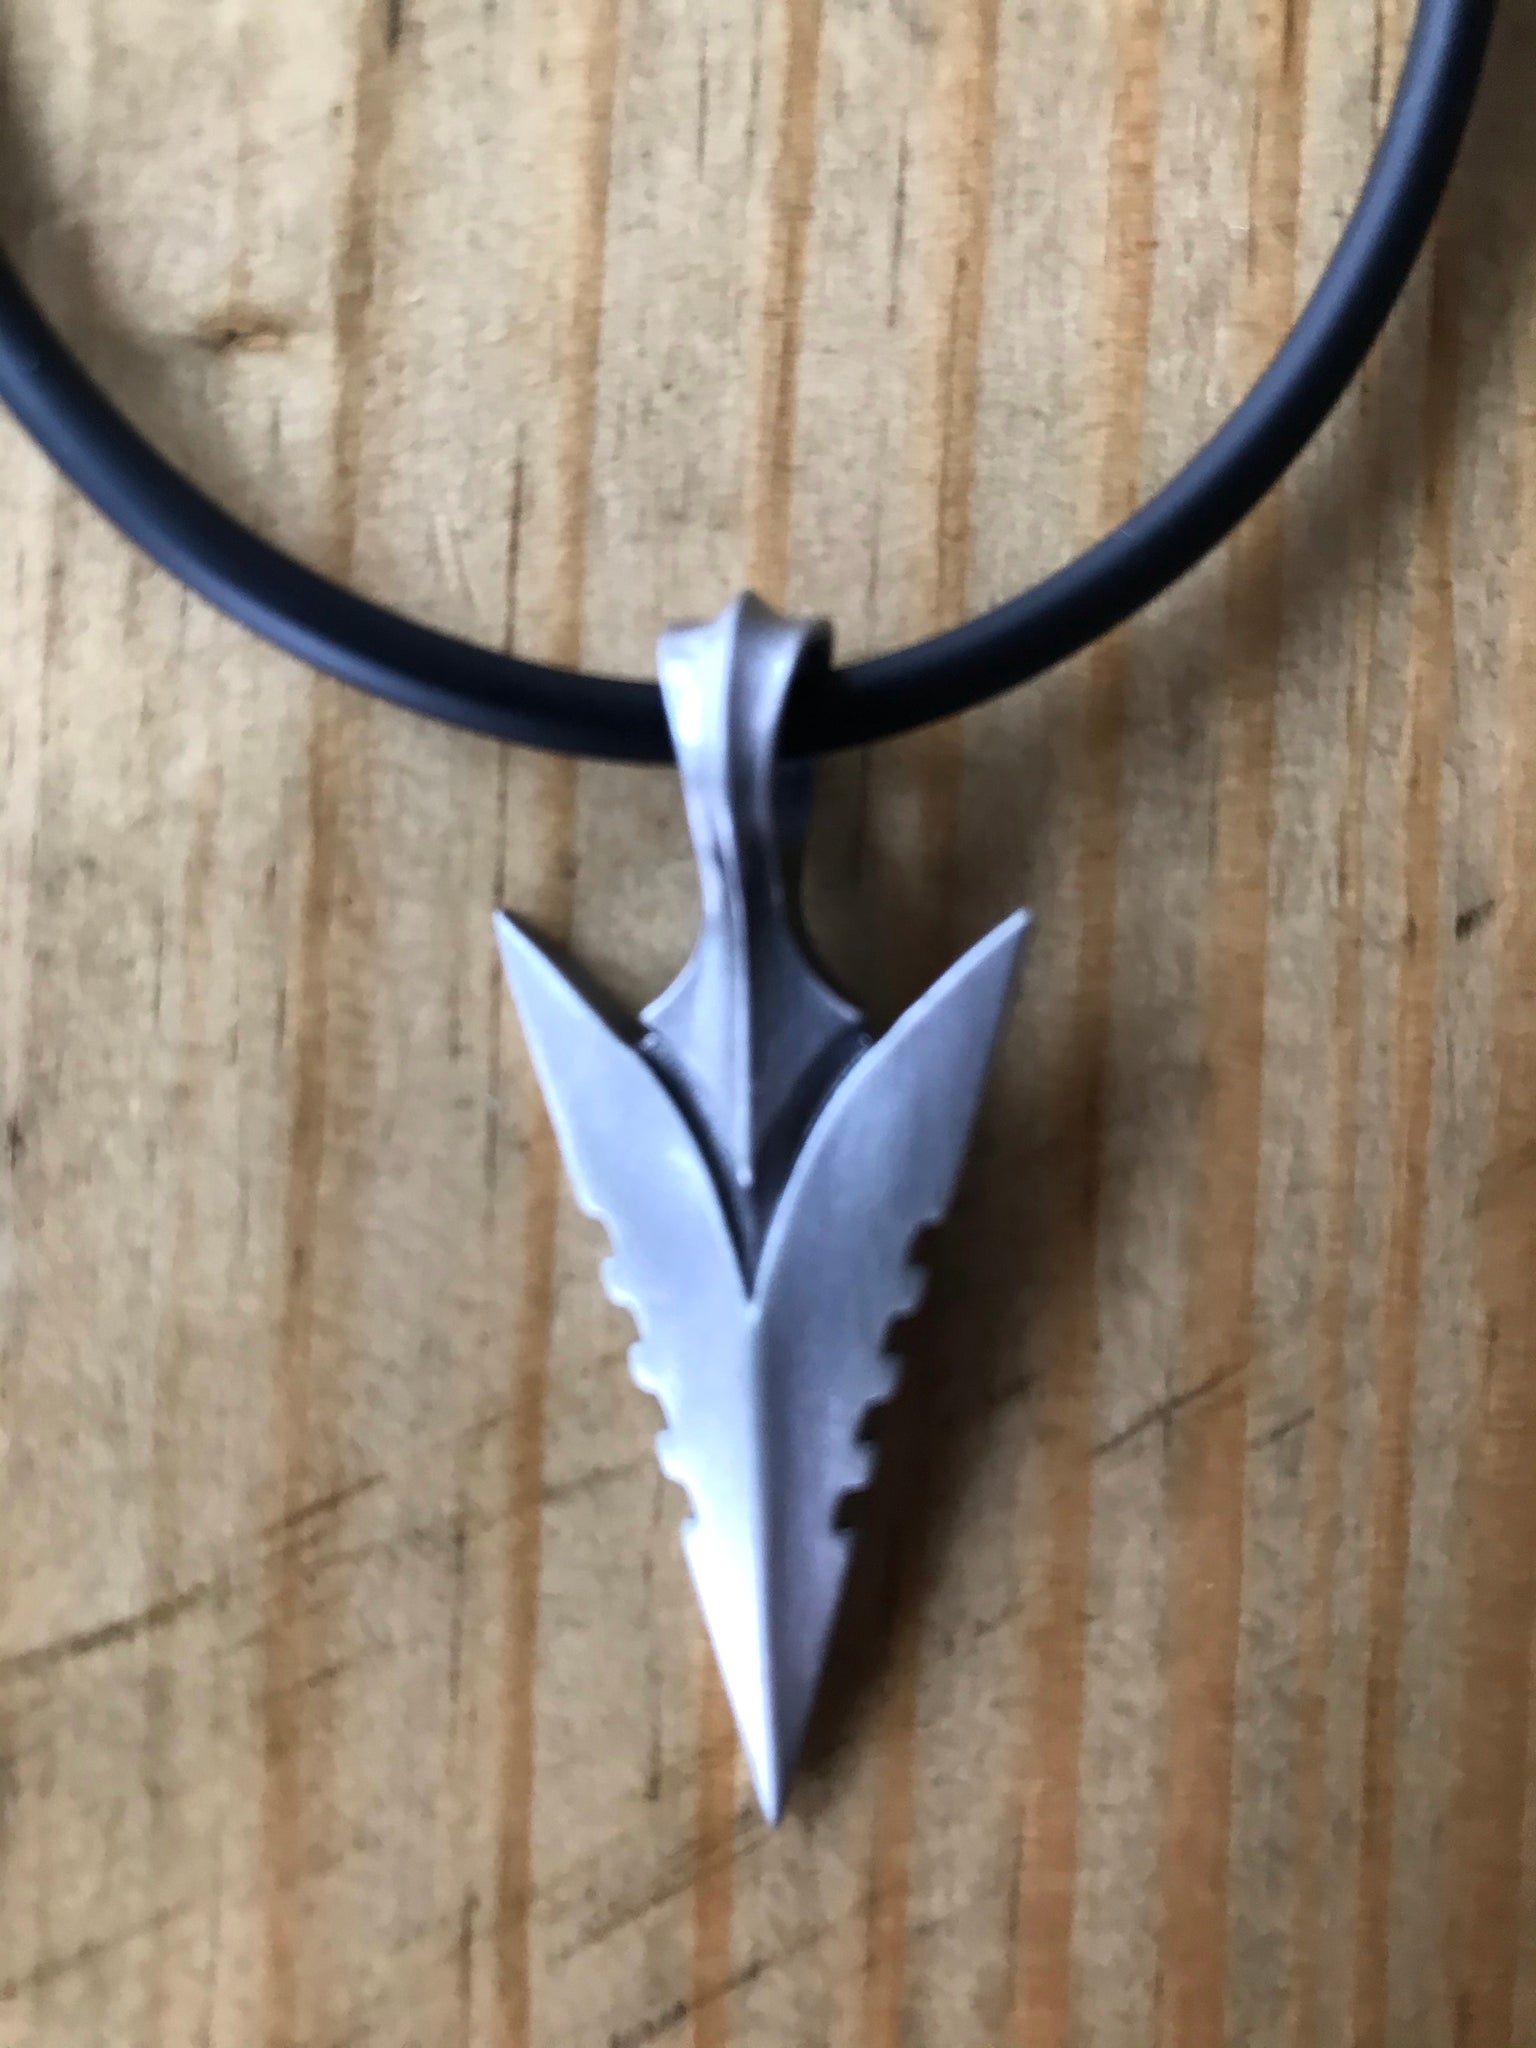 EXCLUSIVE SALE*, Arrowhead Pendant on Adjustable Black Rope Necklace  (Antique Silver) - Necklaces - Columbus, Ohio, Facebook Marketplace